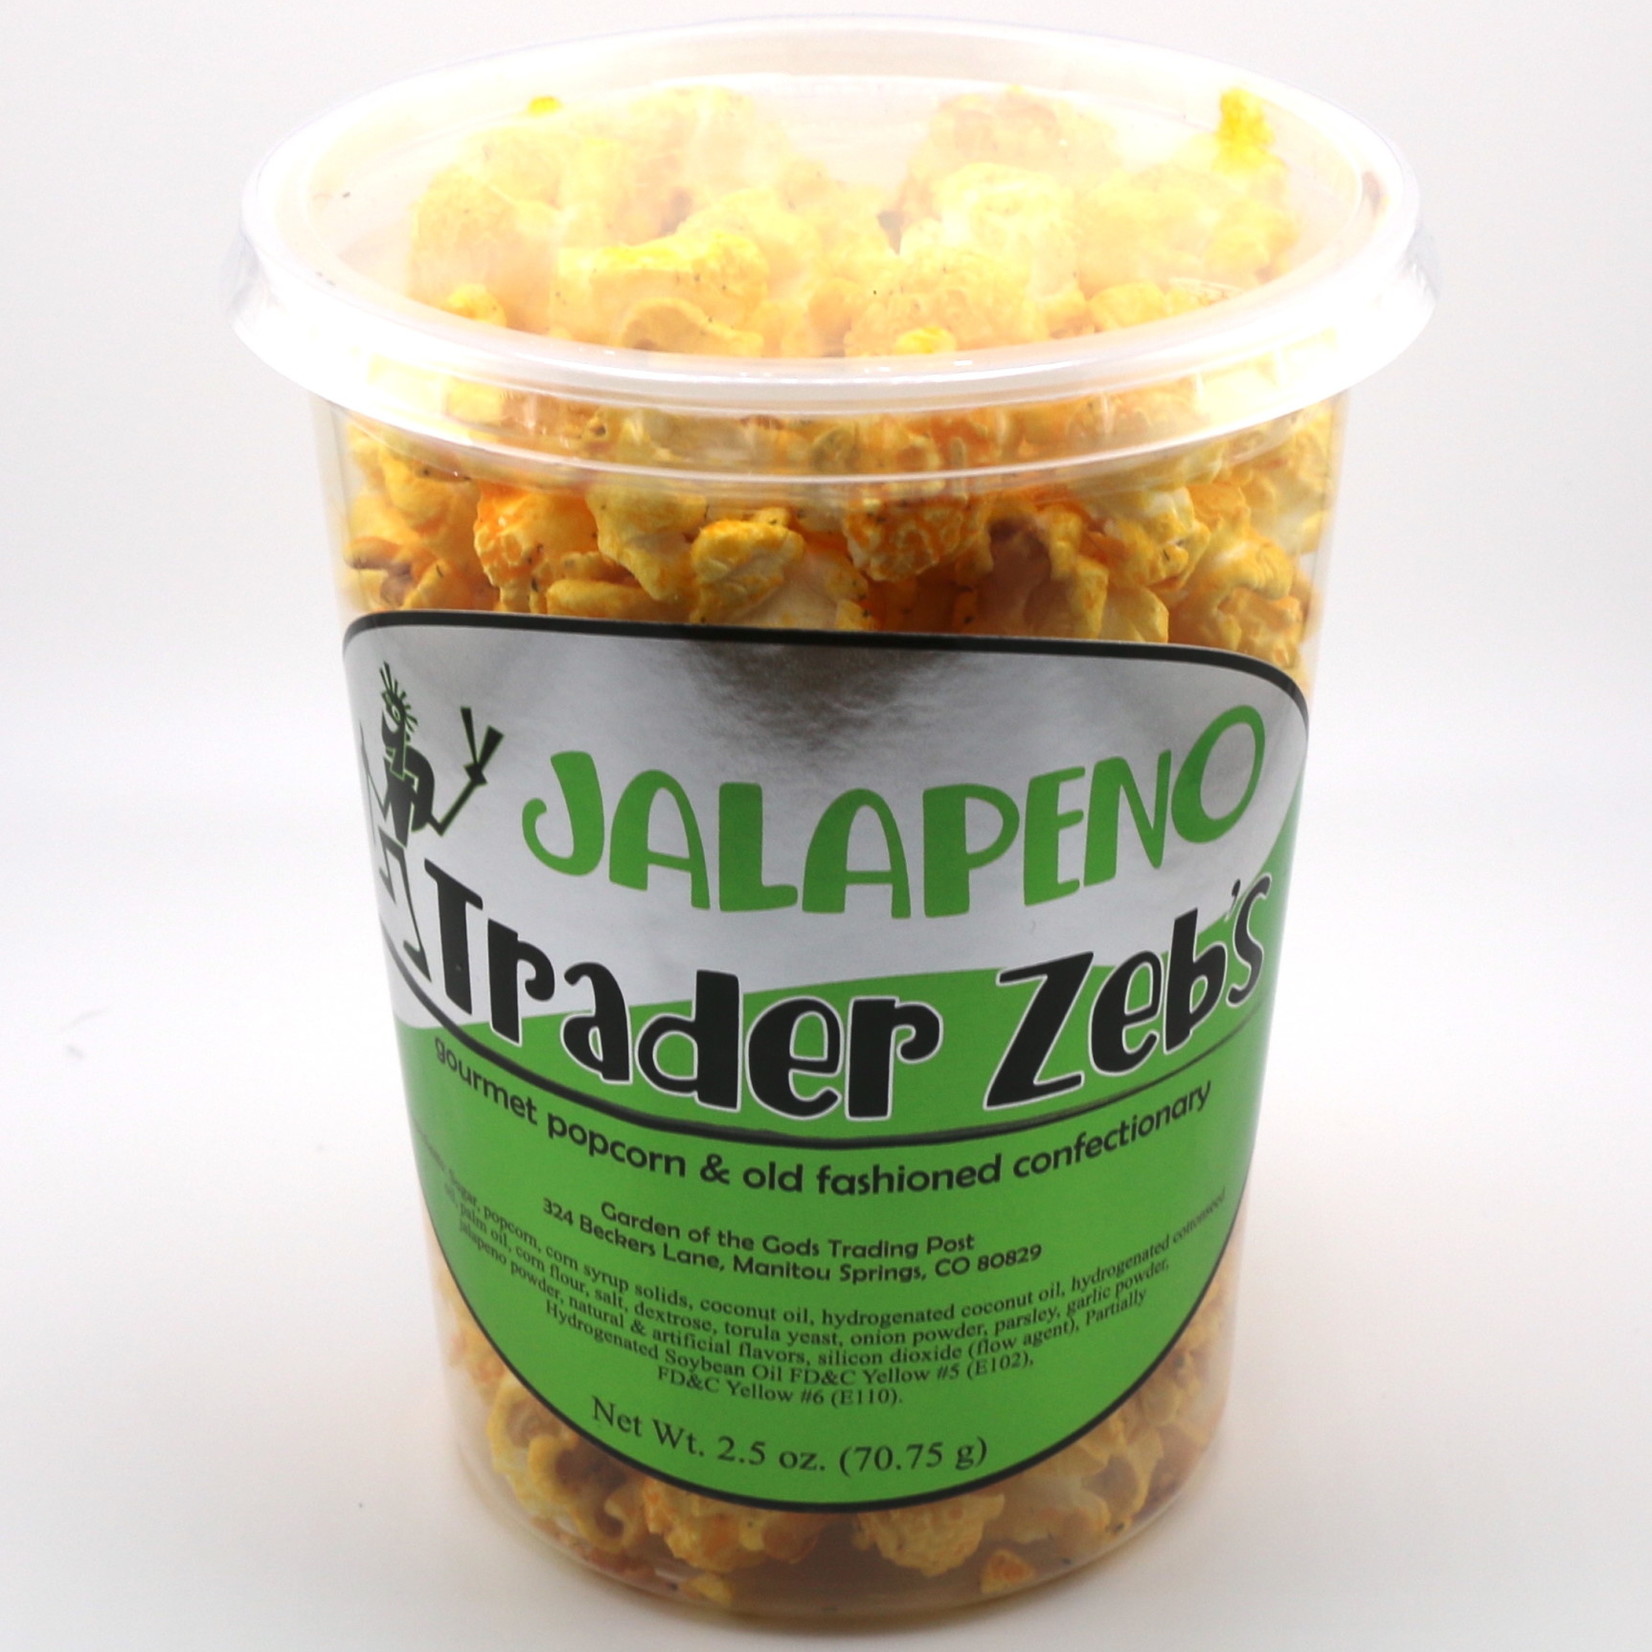 GOG GOURMET POPCORN Jalapeño Cheddar Popcorn - 5 oz.